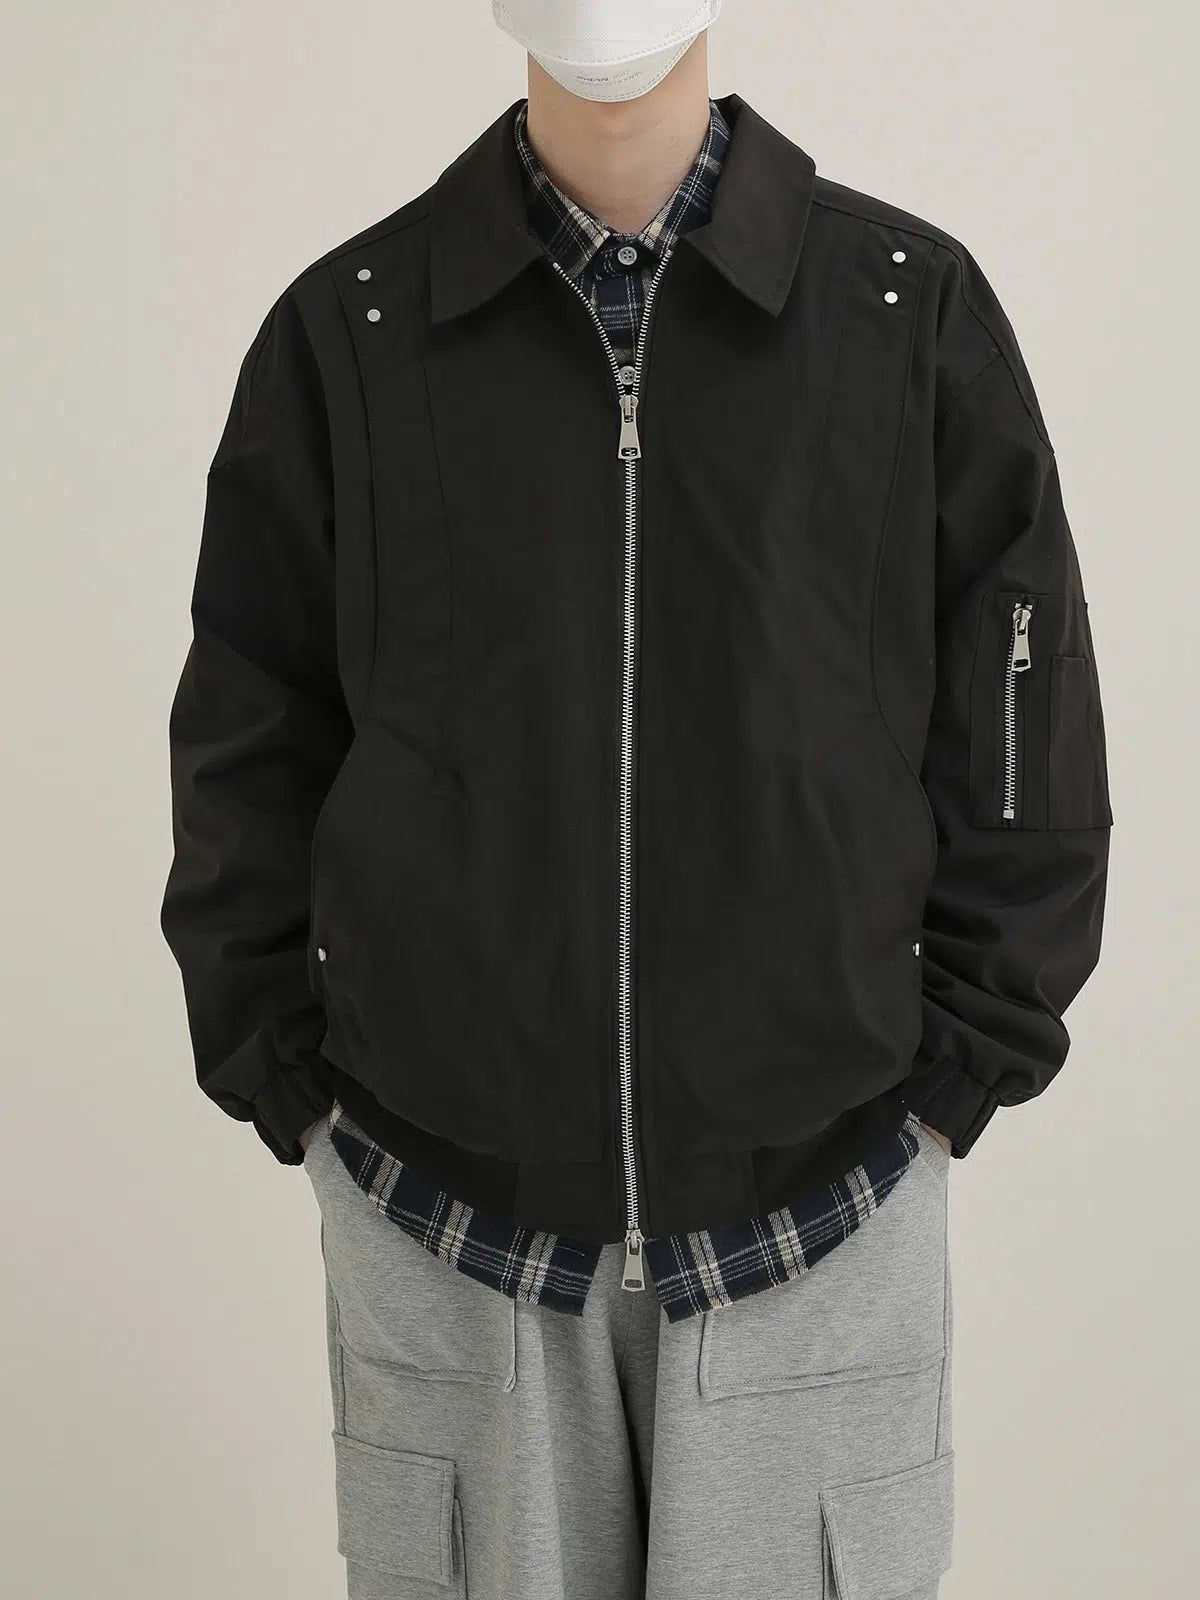 Zhou Collared and Zippered Jacket-korean-fashion-Jacket-Zhou's Closet-OH Garments